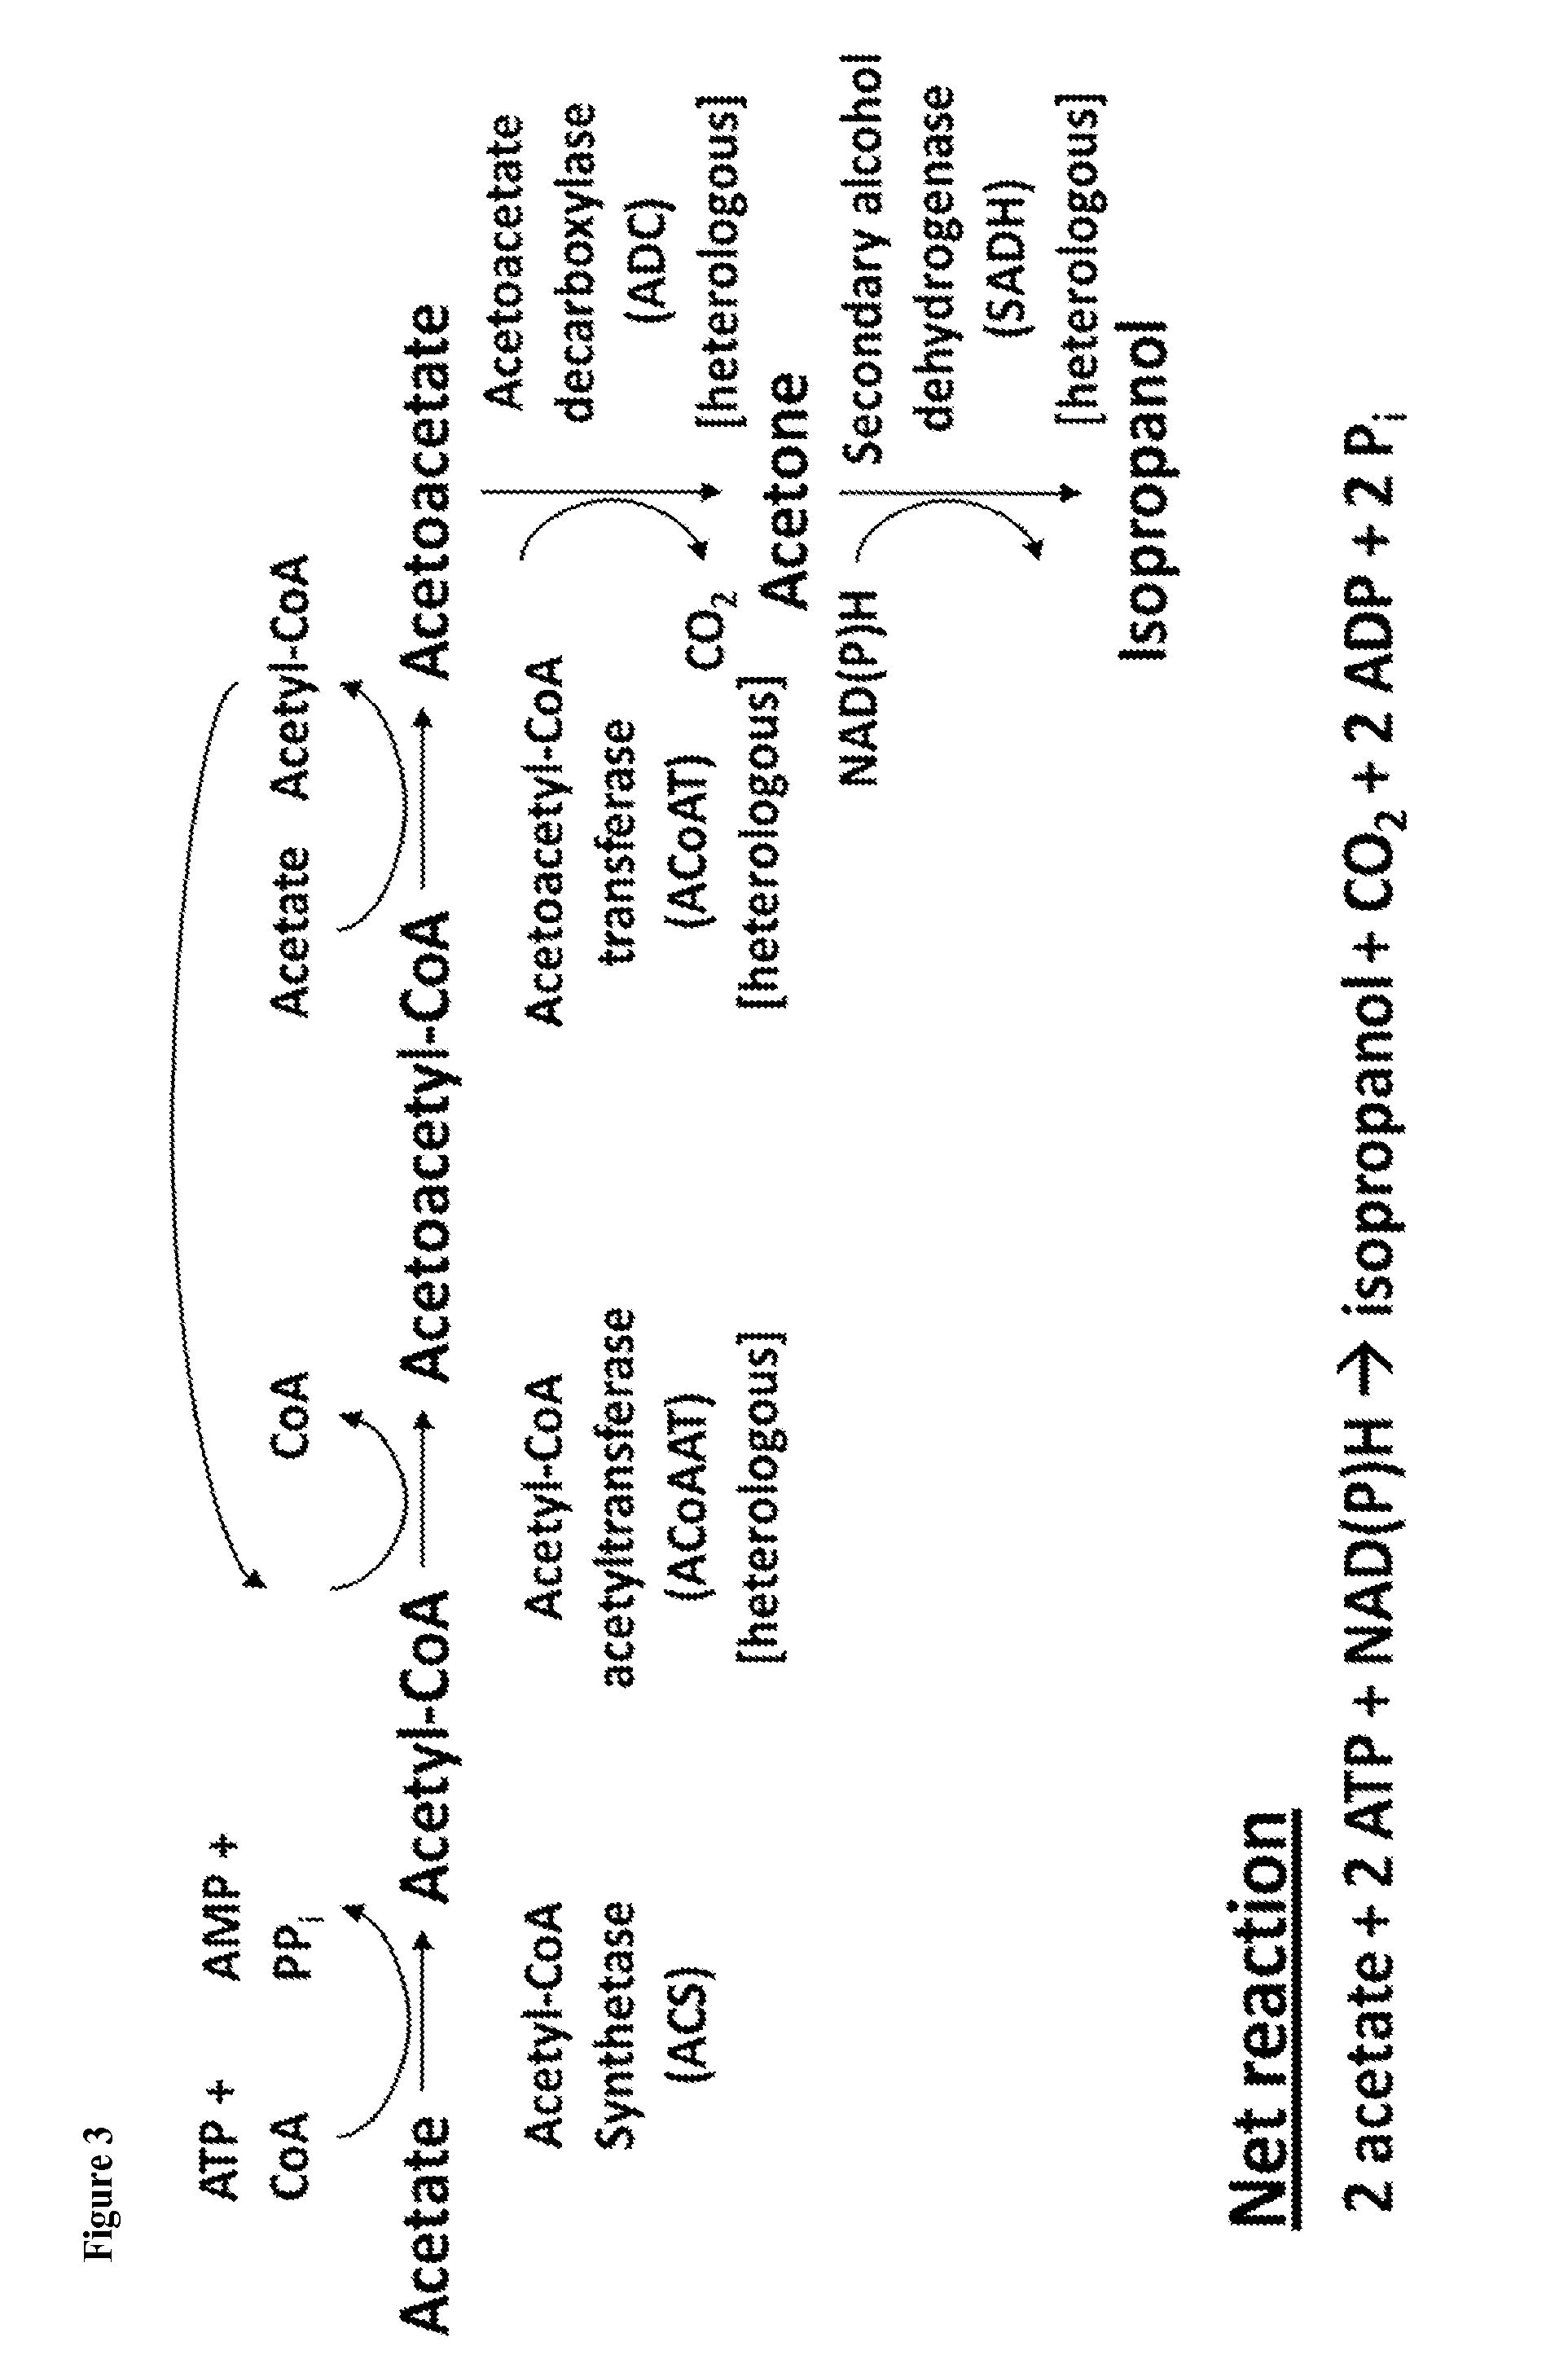 Method for Acetate Consumption During Ethanolic Fermentation of Cellulosic Feedstocks